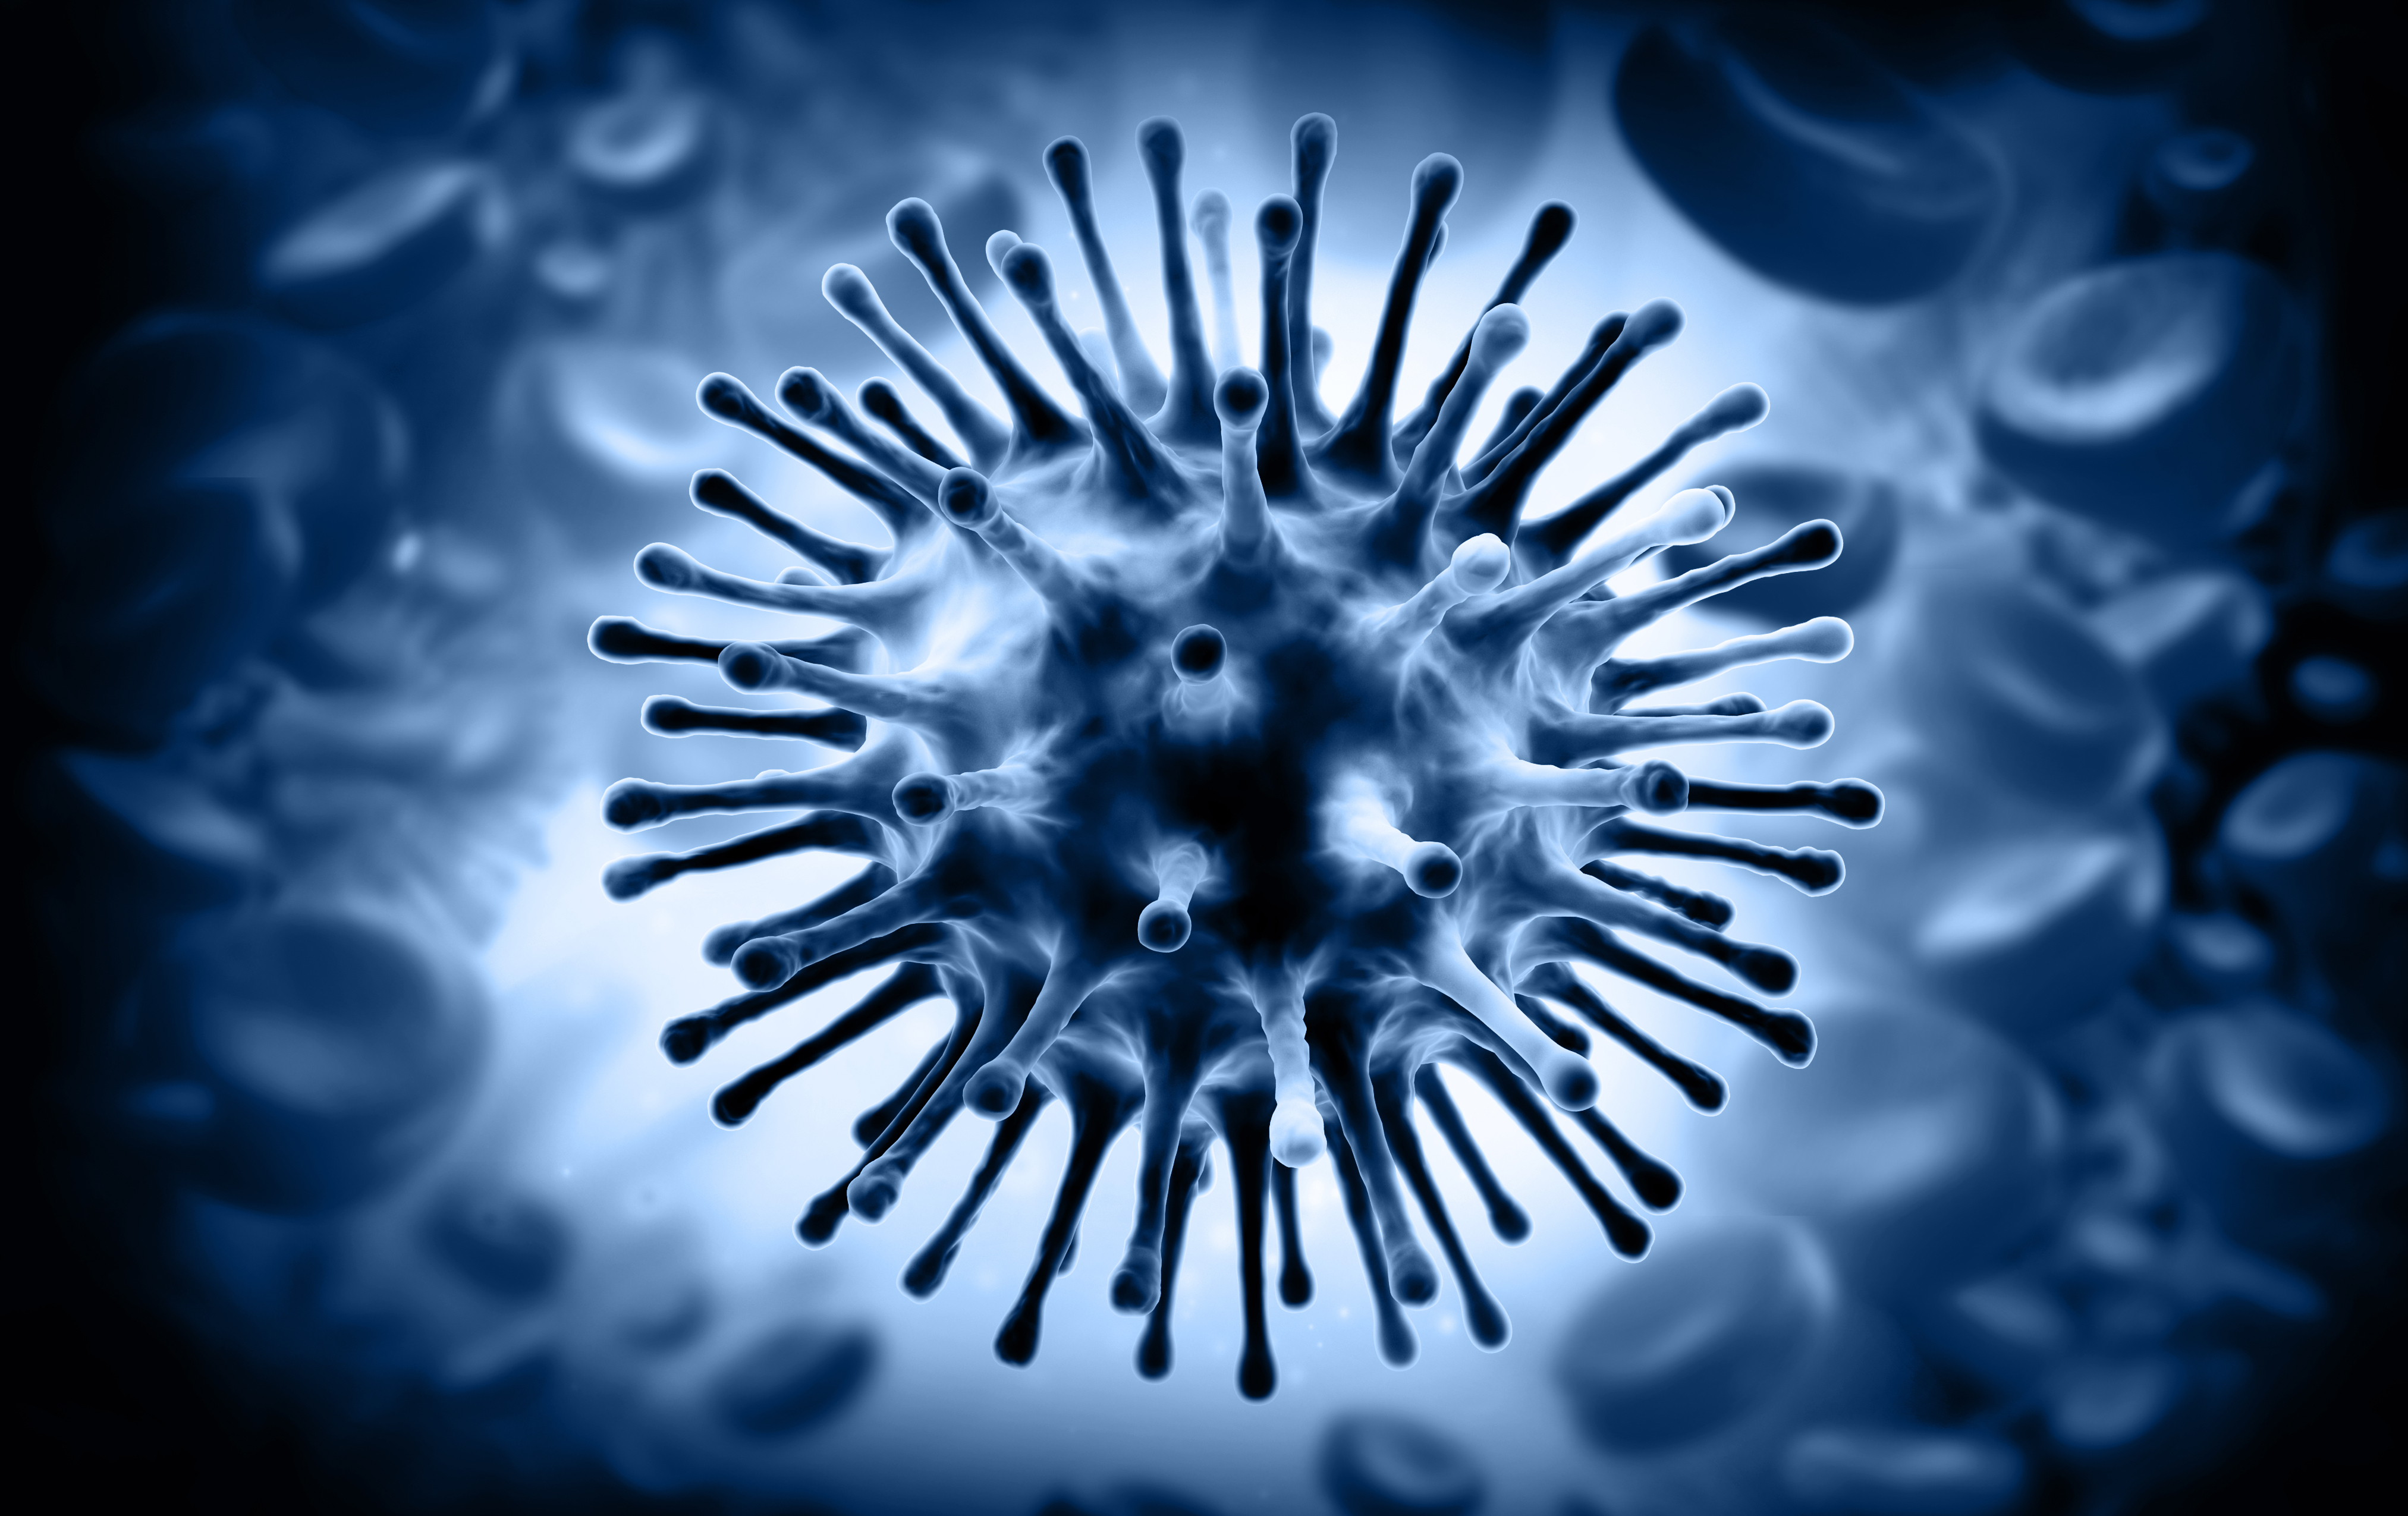 H1N1 influenza virus illustration